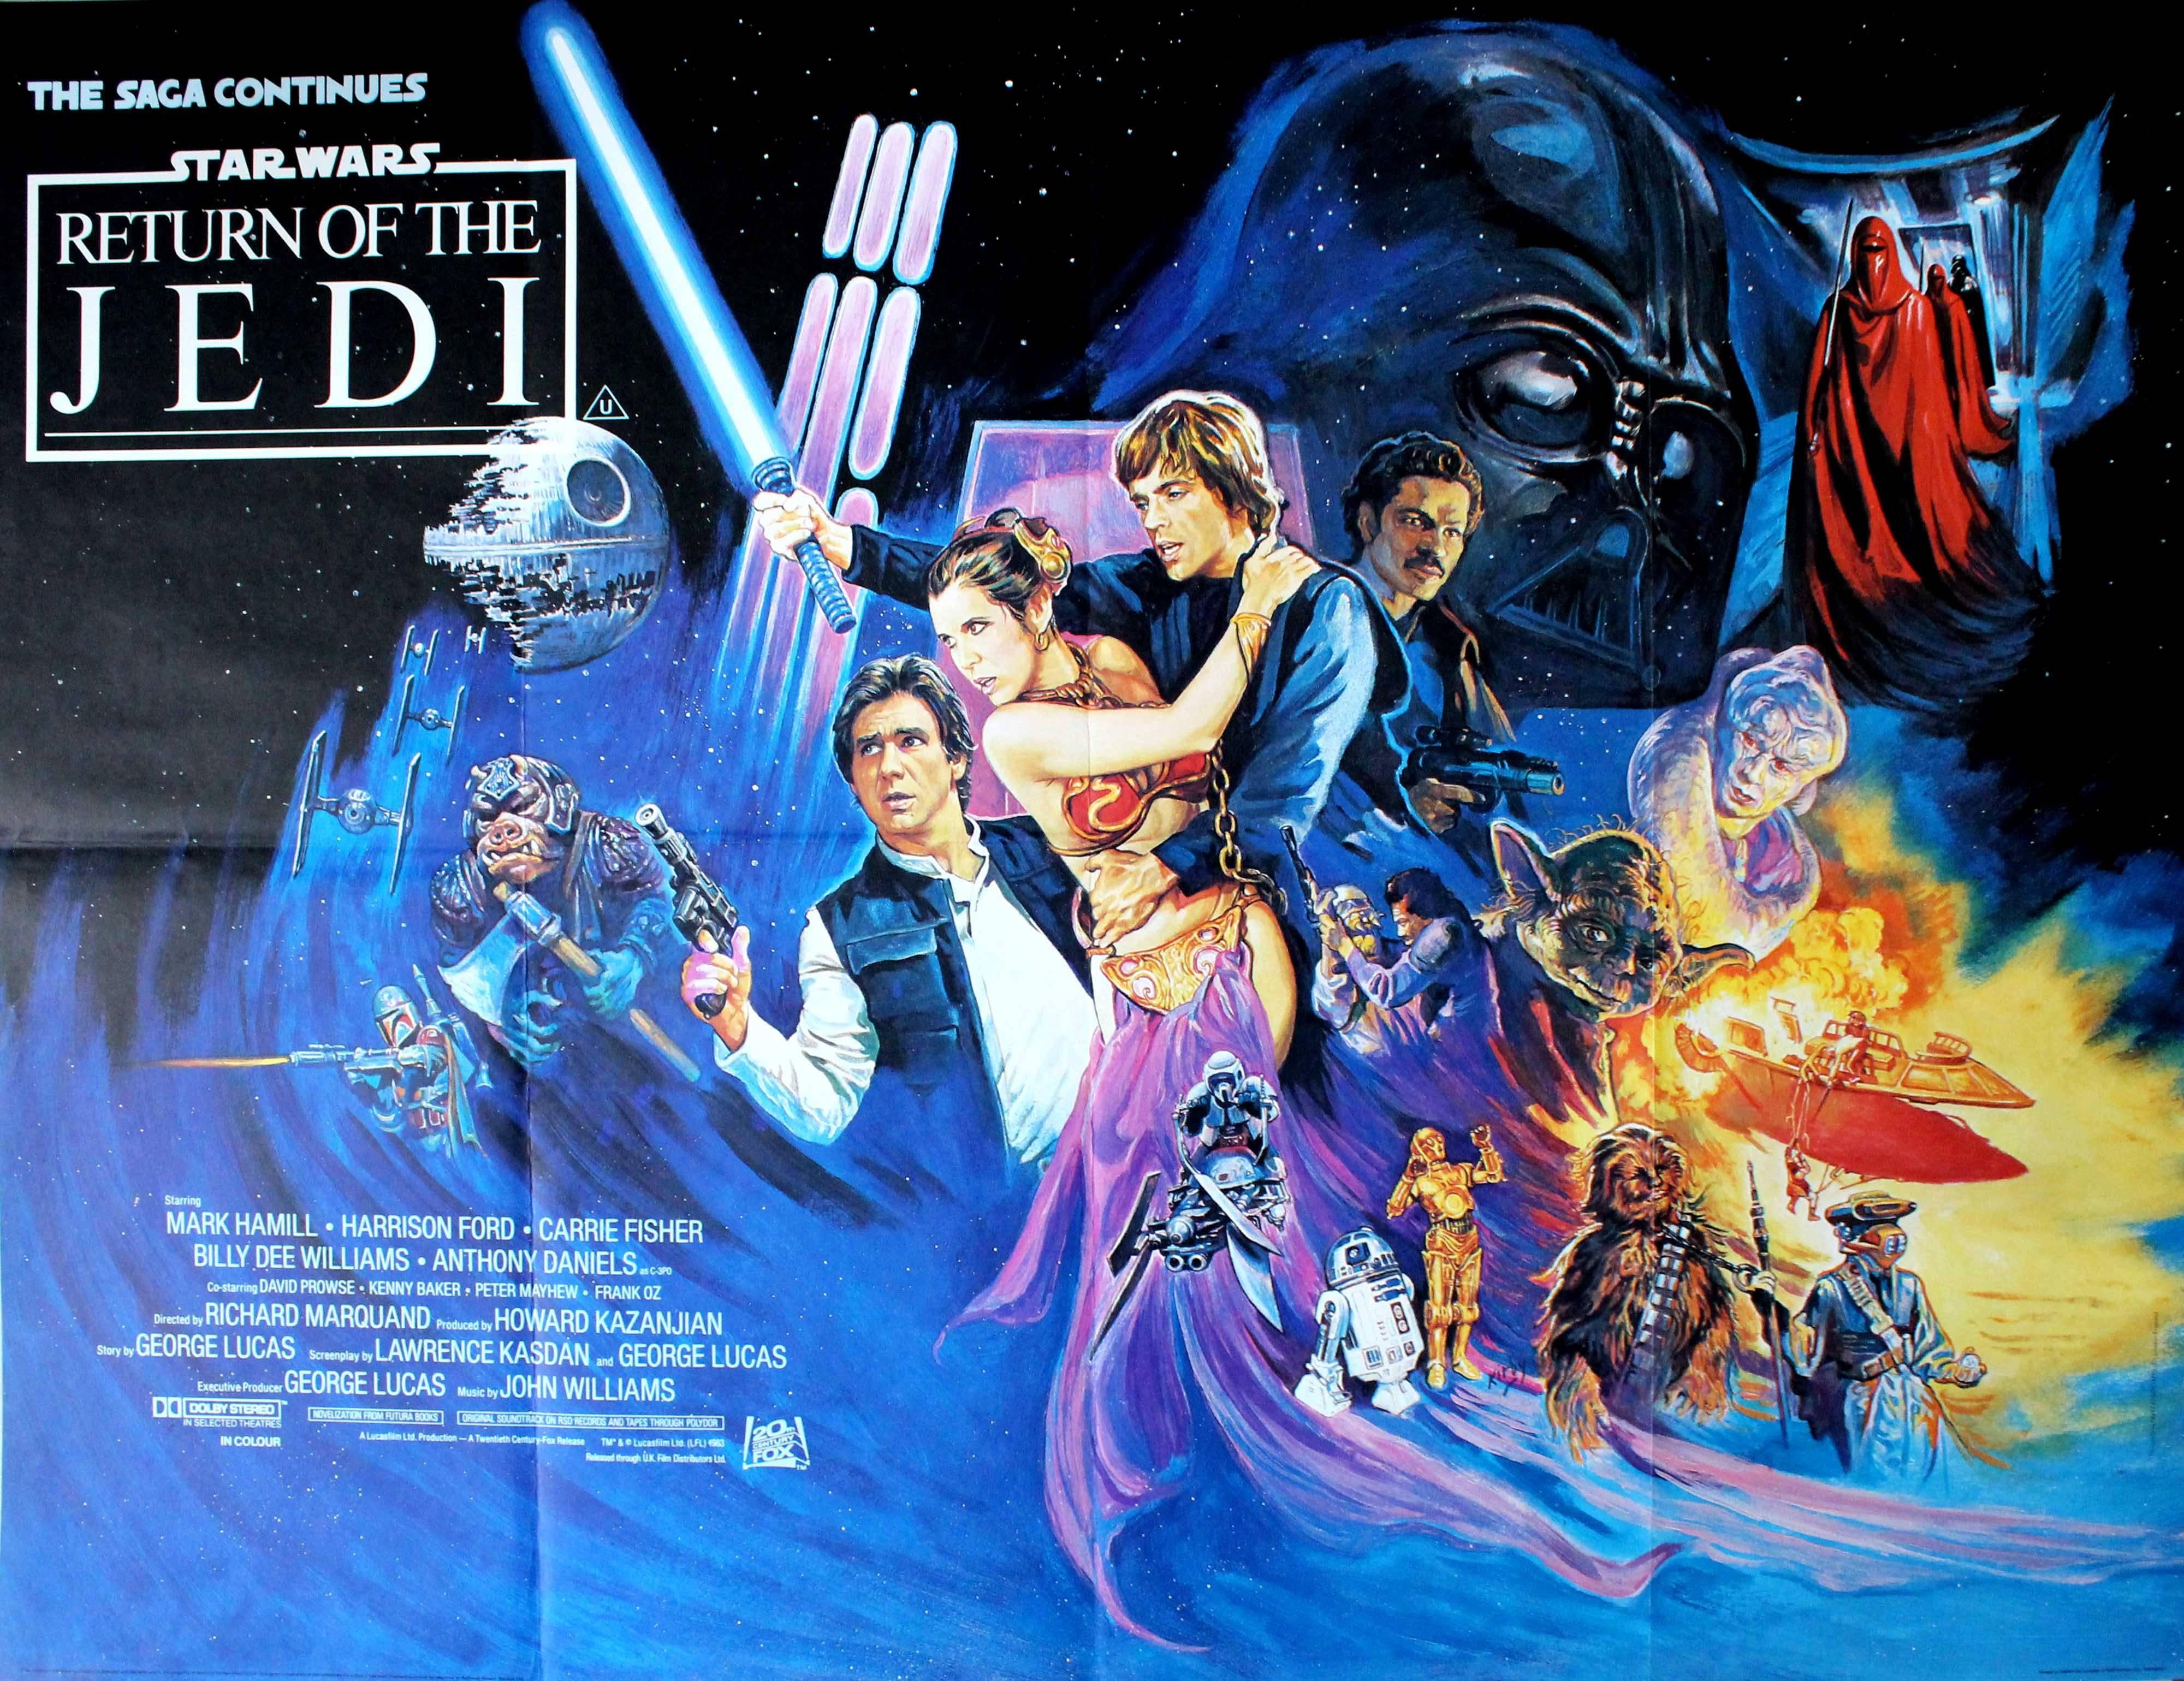 Ronald William "Josh" Kirby Print - Original Vintage 1983 Movie Poster - Star Wars Episode VI The Return Of The Jedi